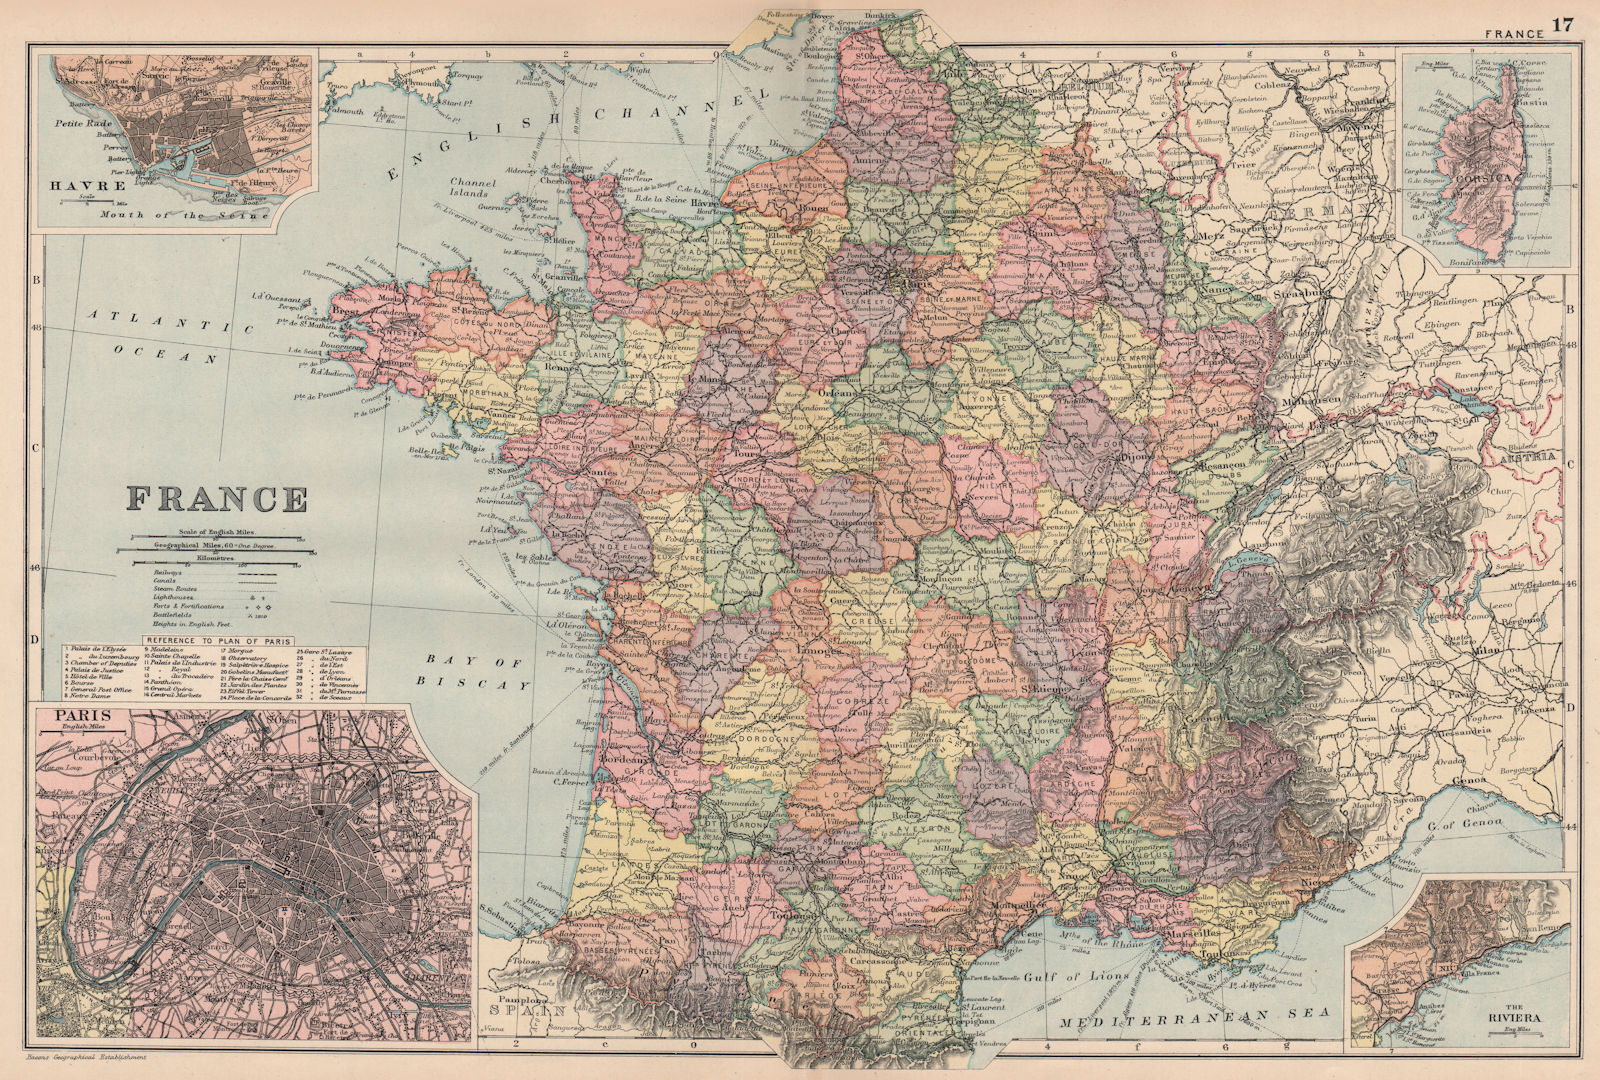 FRANCE. w/o Alsace/Lorraine. Inset Le Havre & Paris. BACON 1893 old map